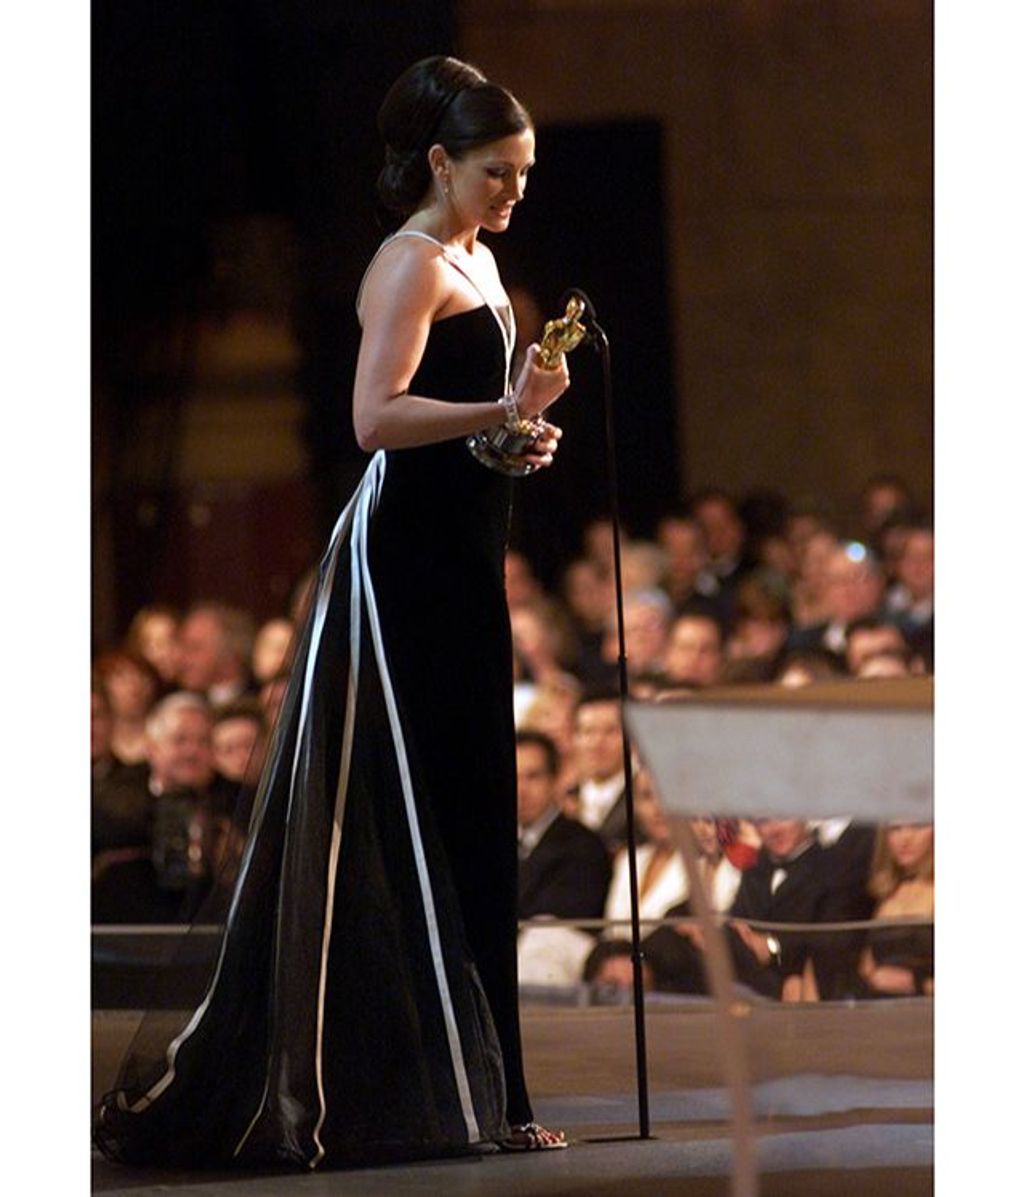 "73rd Annual Academy Awards" 03/25/01
Julia Roberts © 2001 AMPAS/MPTV